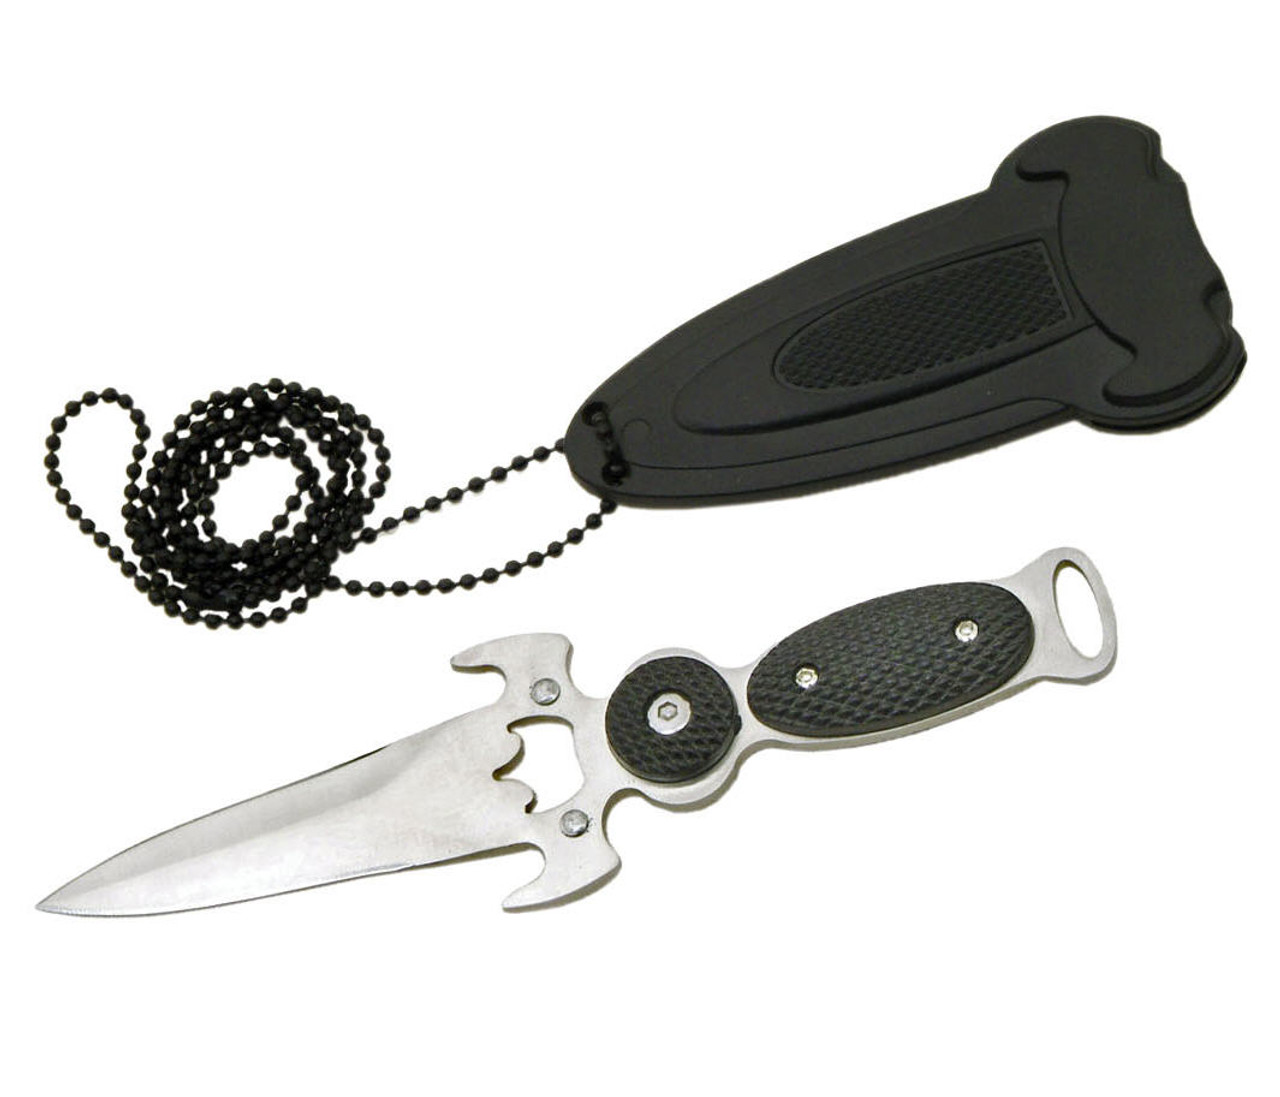 Fang Neck Knife - J&L Self Defense Products